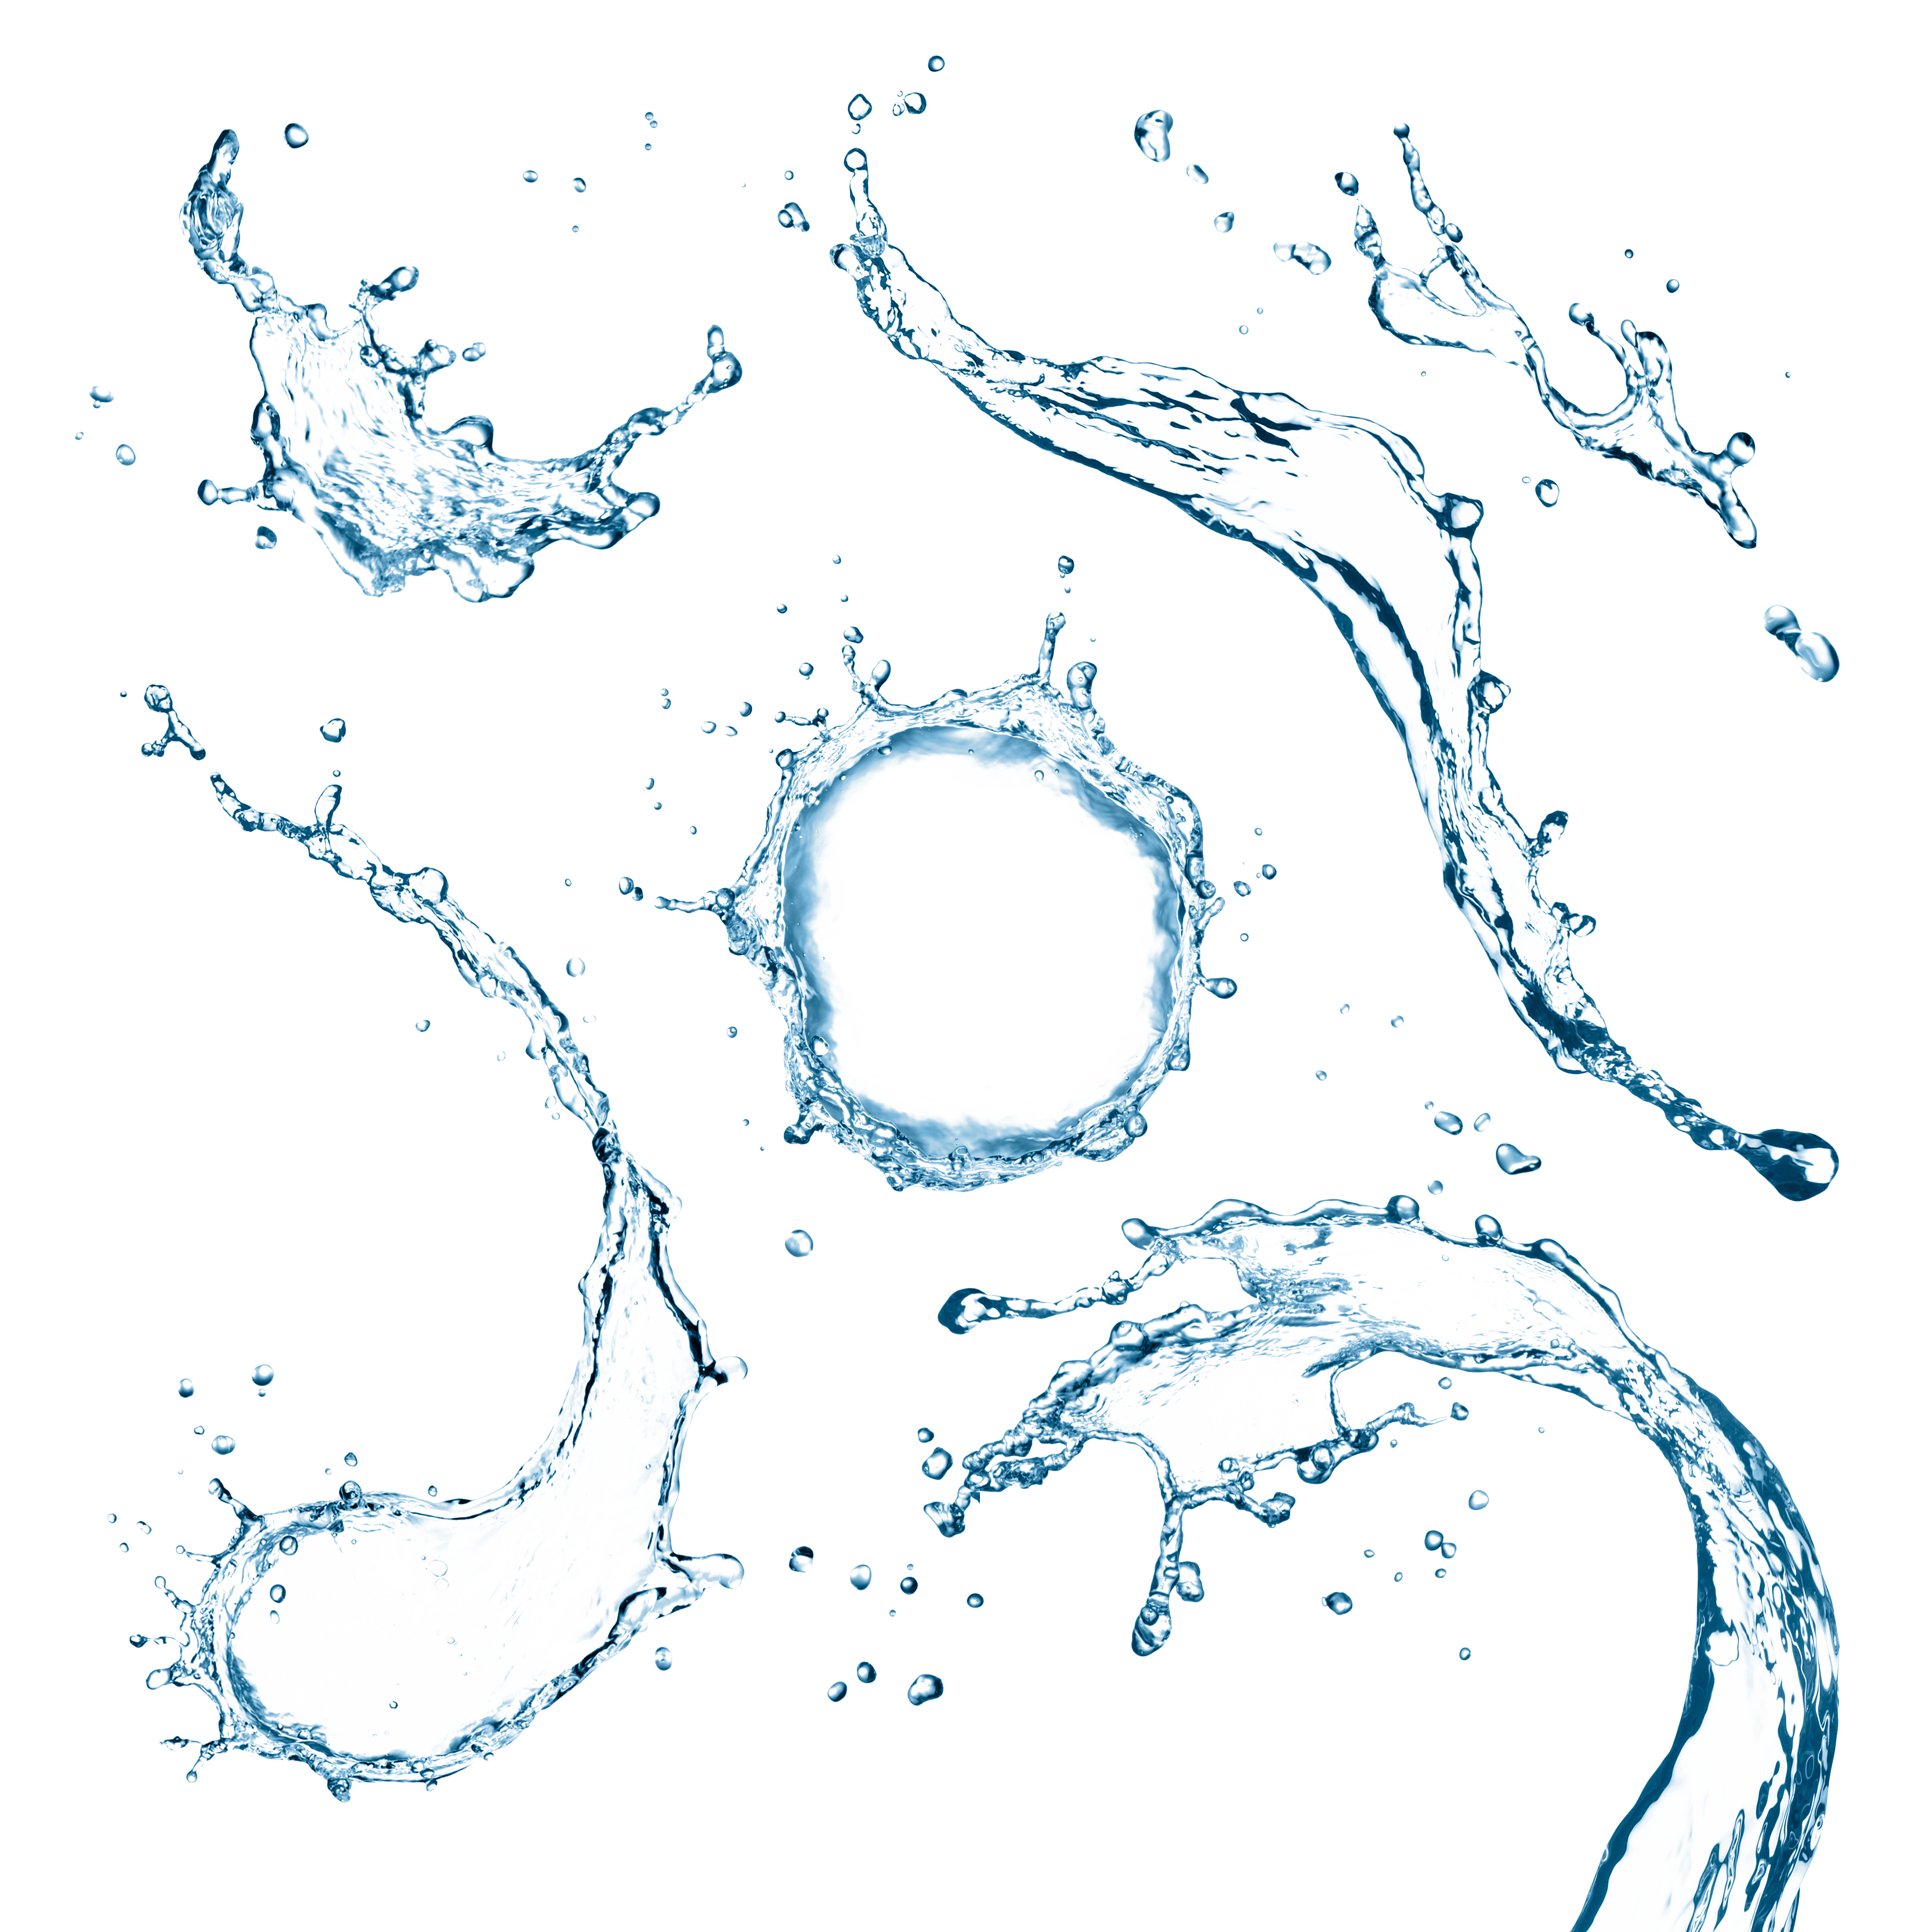 Blue Water Drops PNG Transparent Image